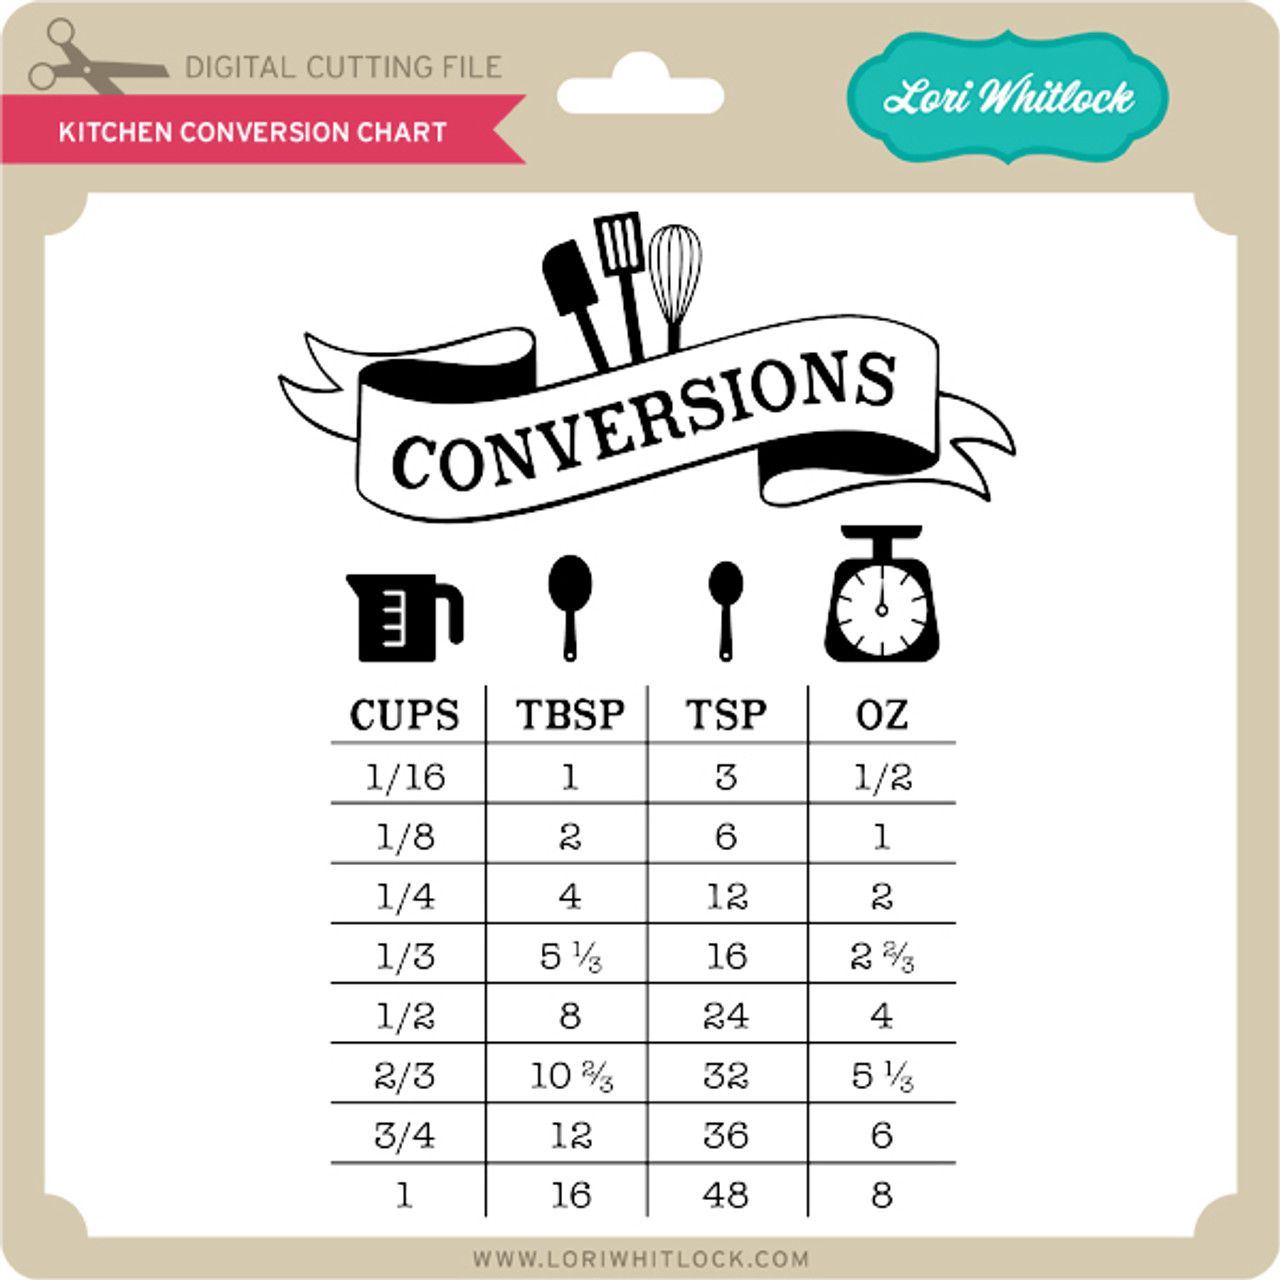 LW Kitchen Conversion Chart  00455.1520293606 ?c=2